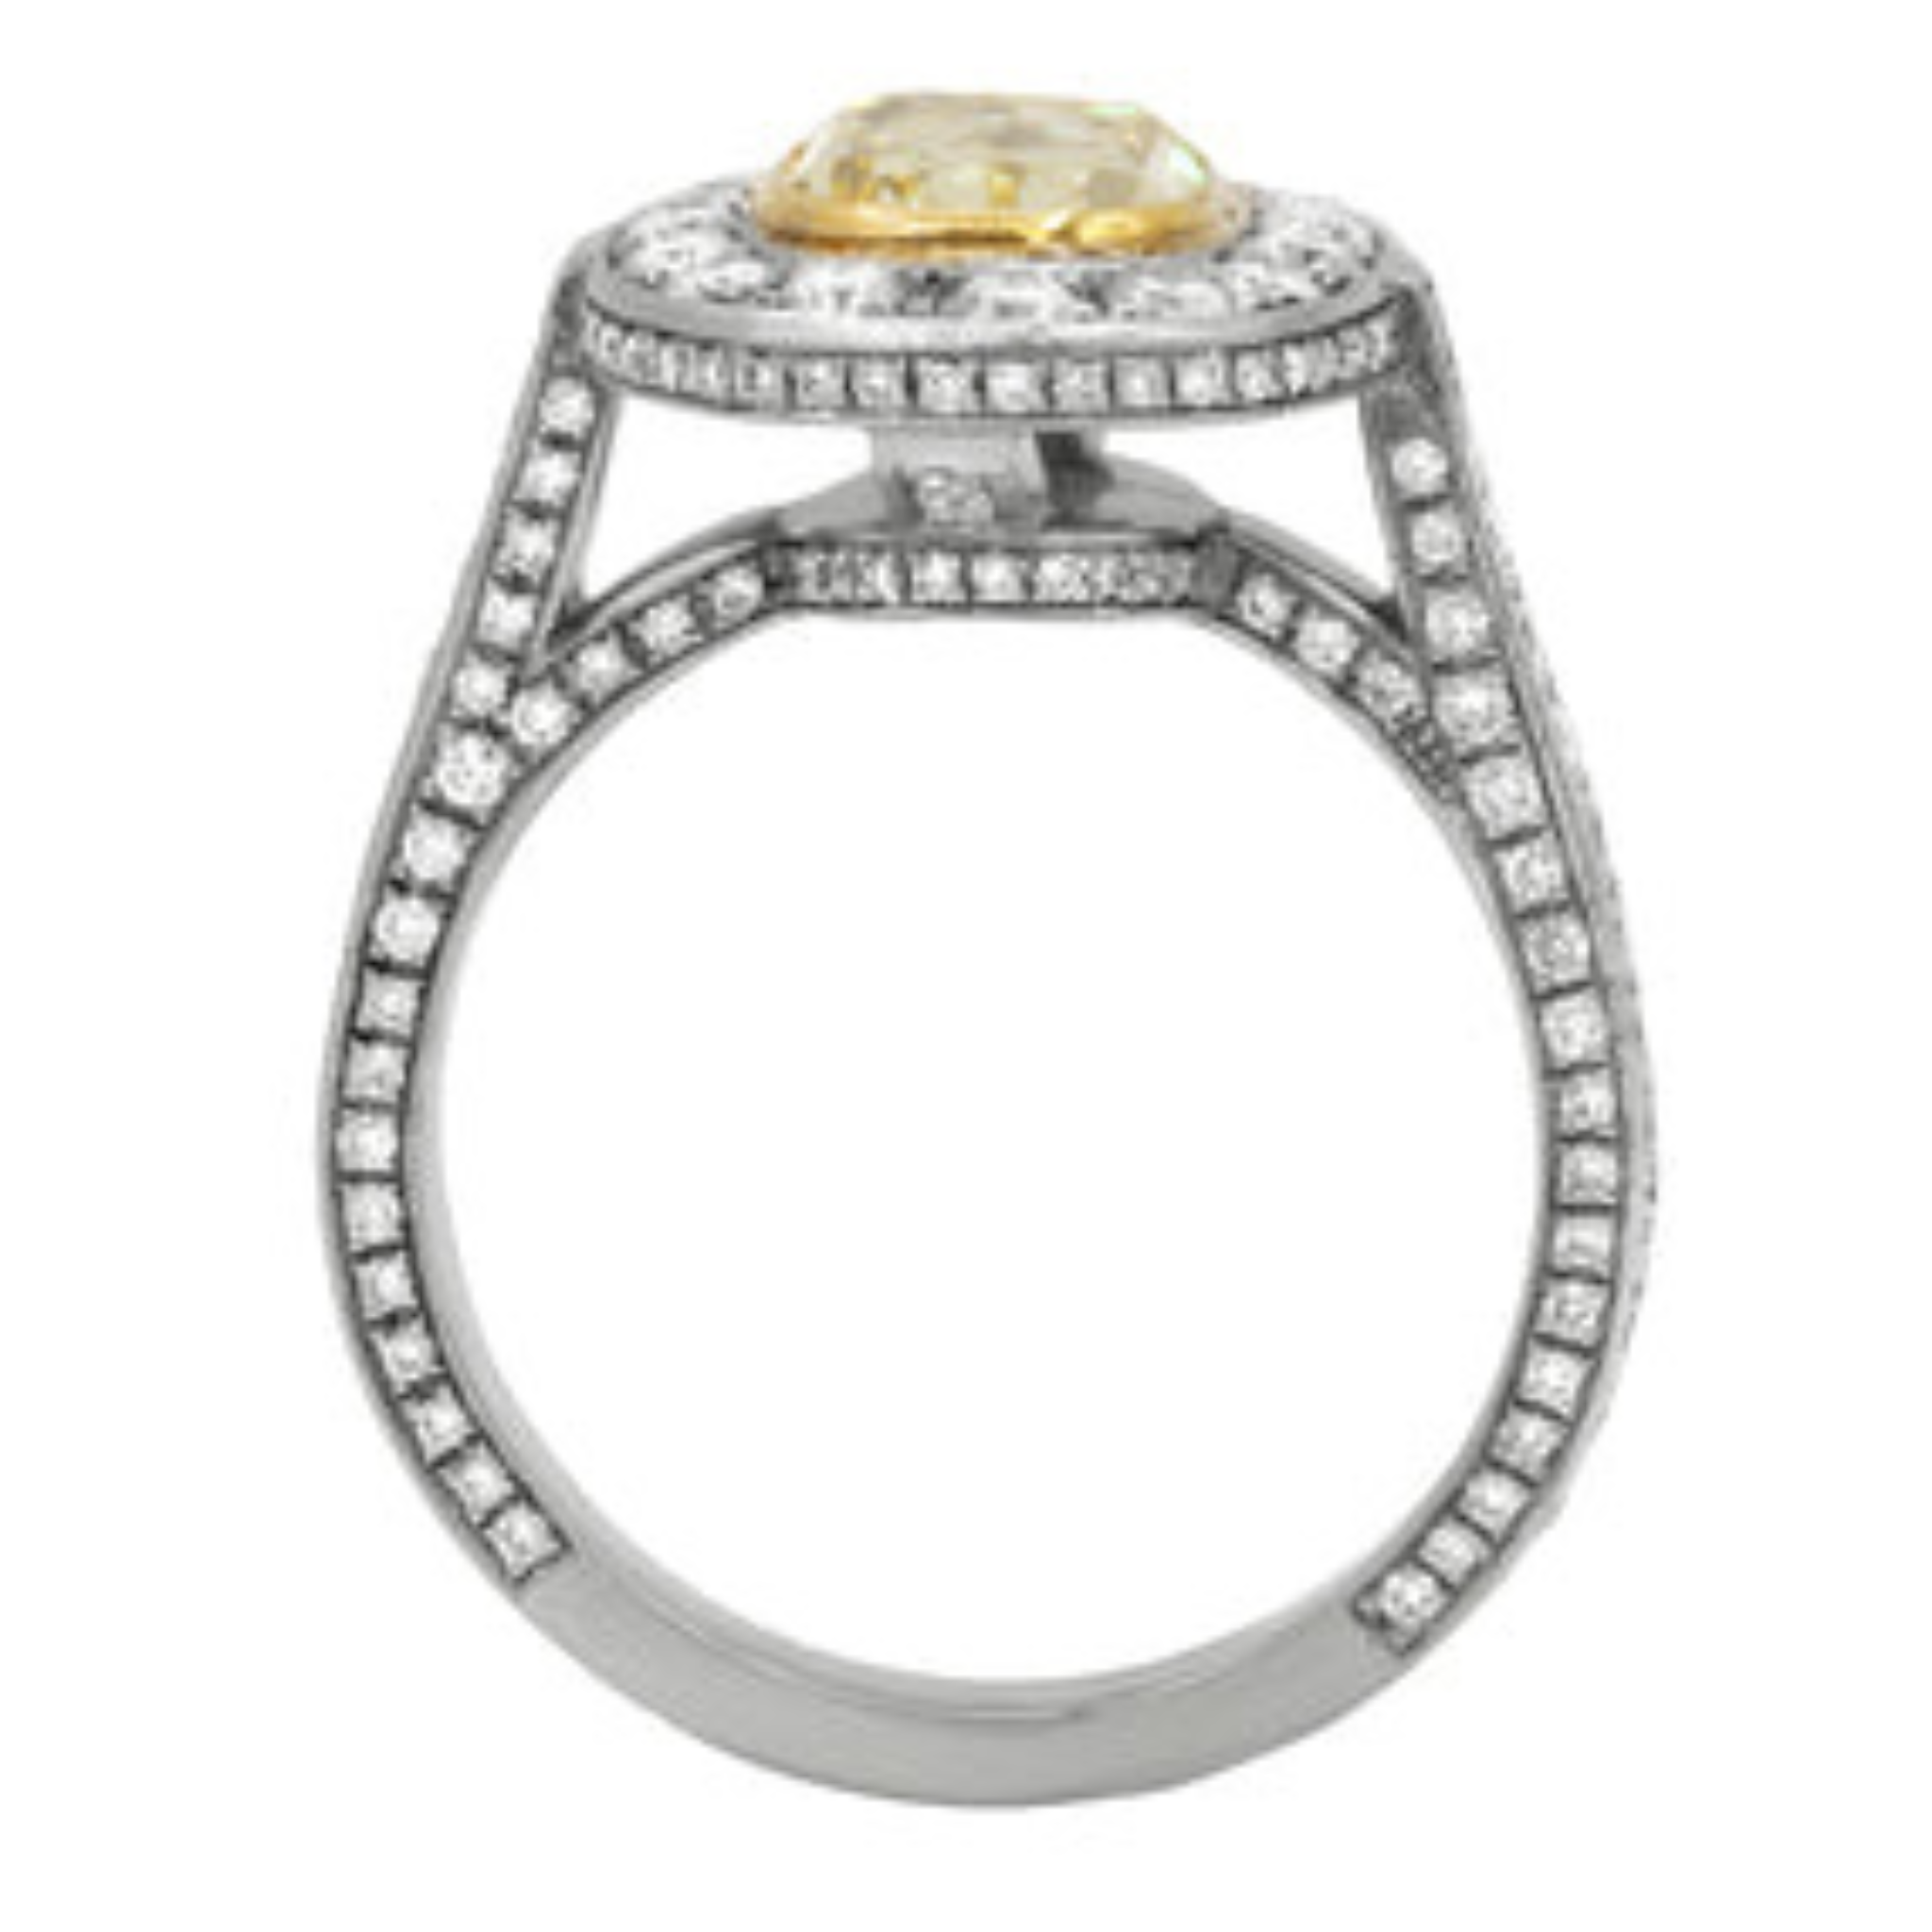 1.67cts Fancy Yellow Diamond Halo Ring.jpg